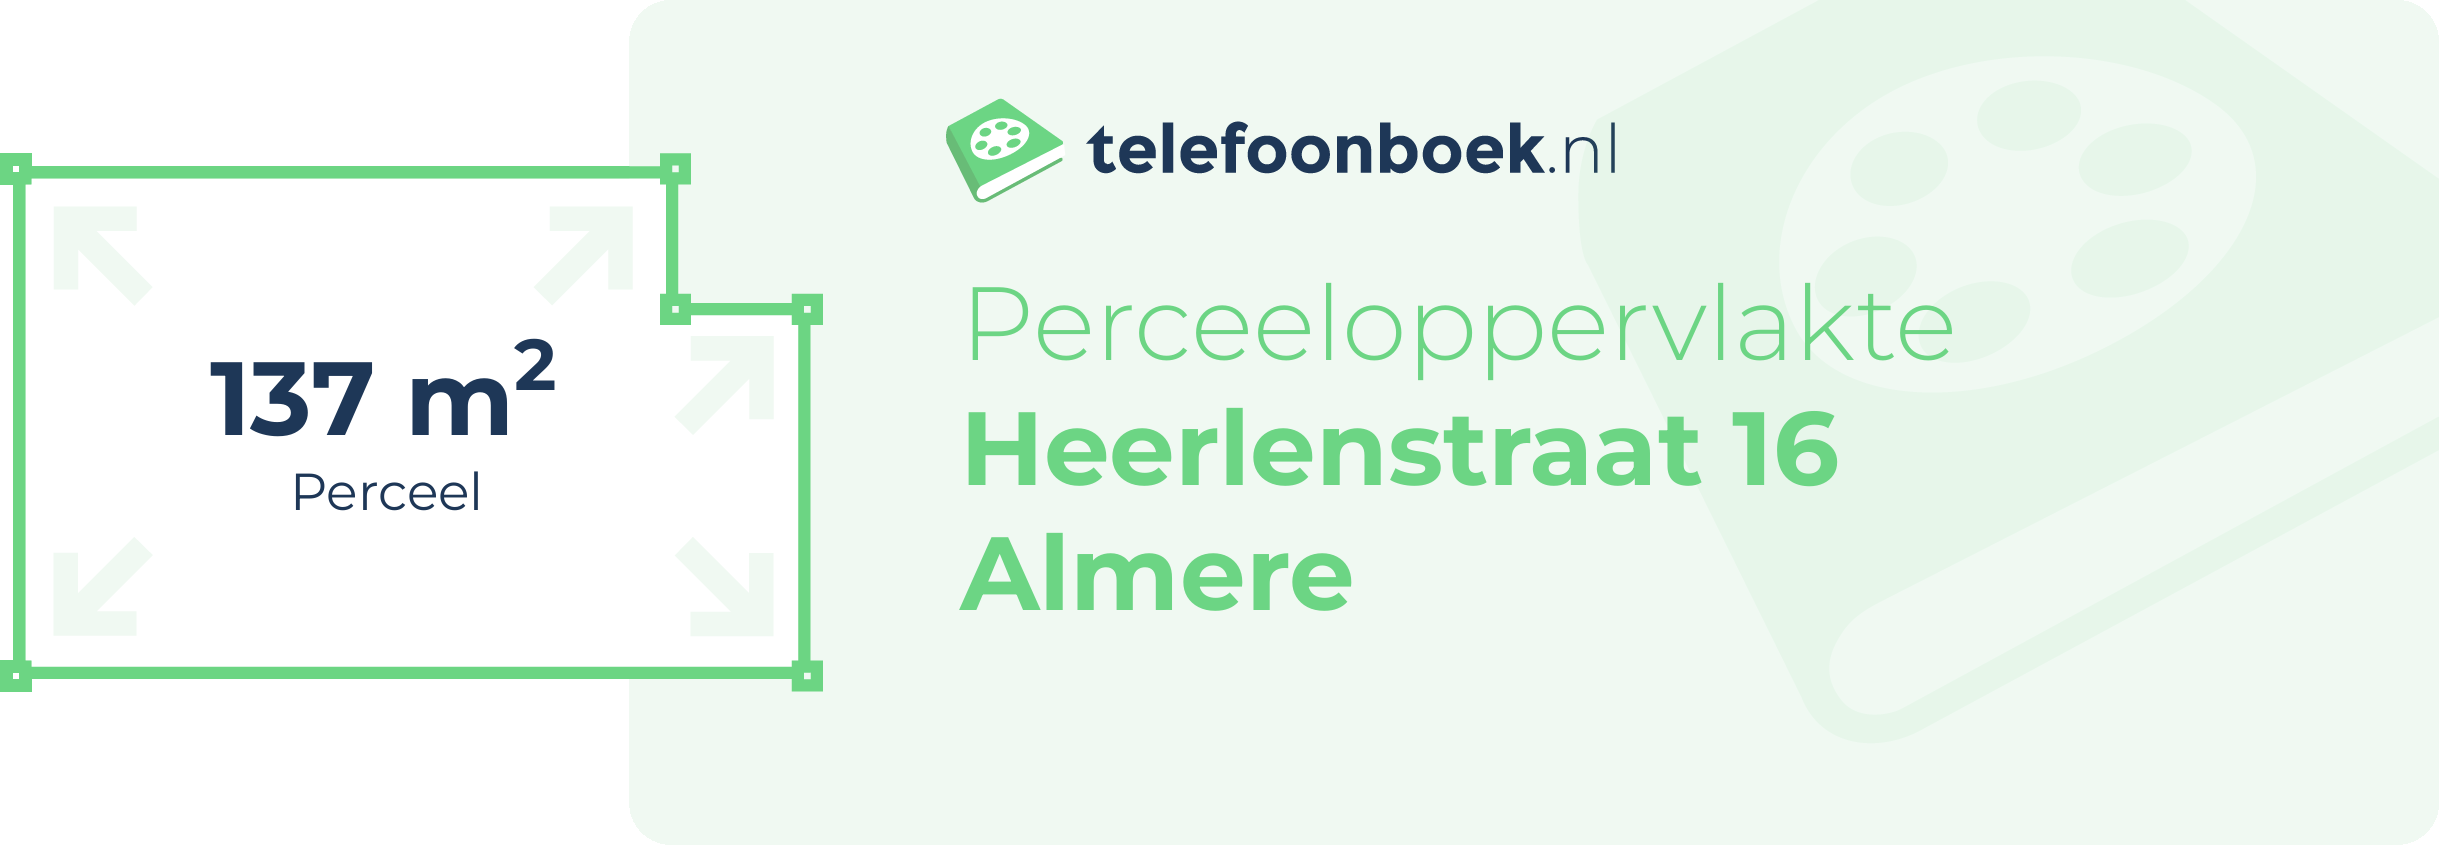 Perceeloppervlakte Heerlenstraat 16 Almere